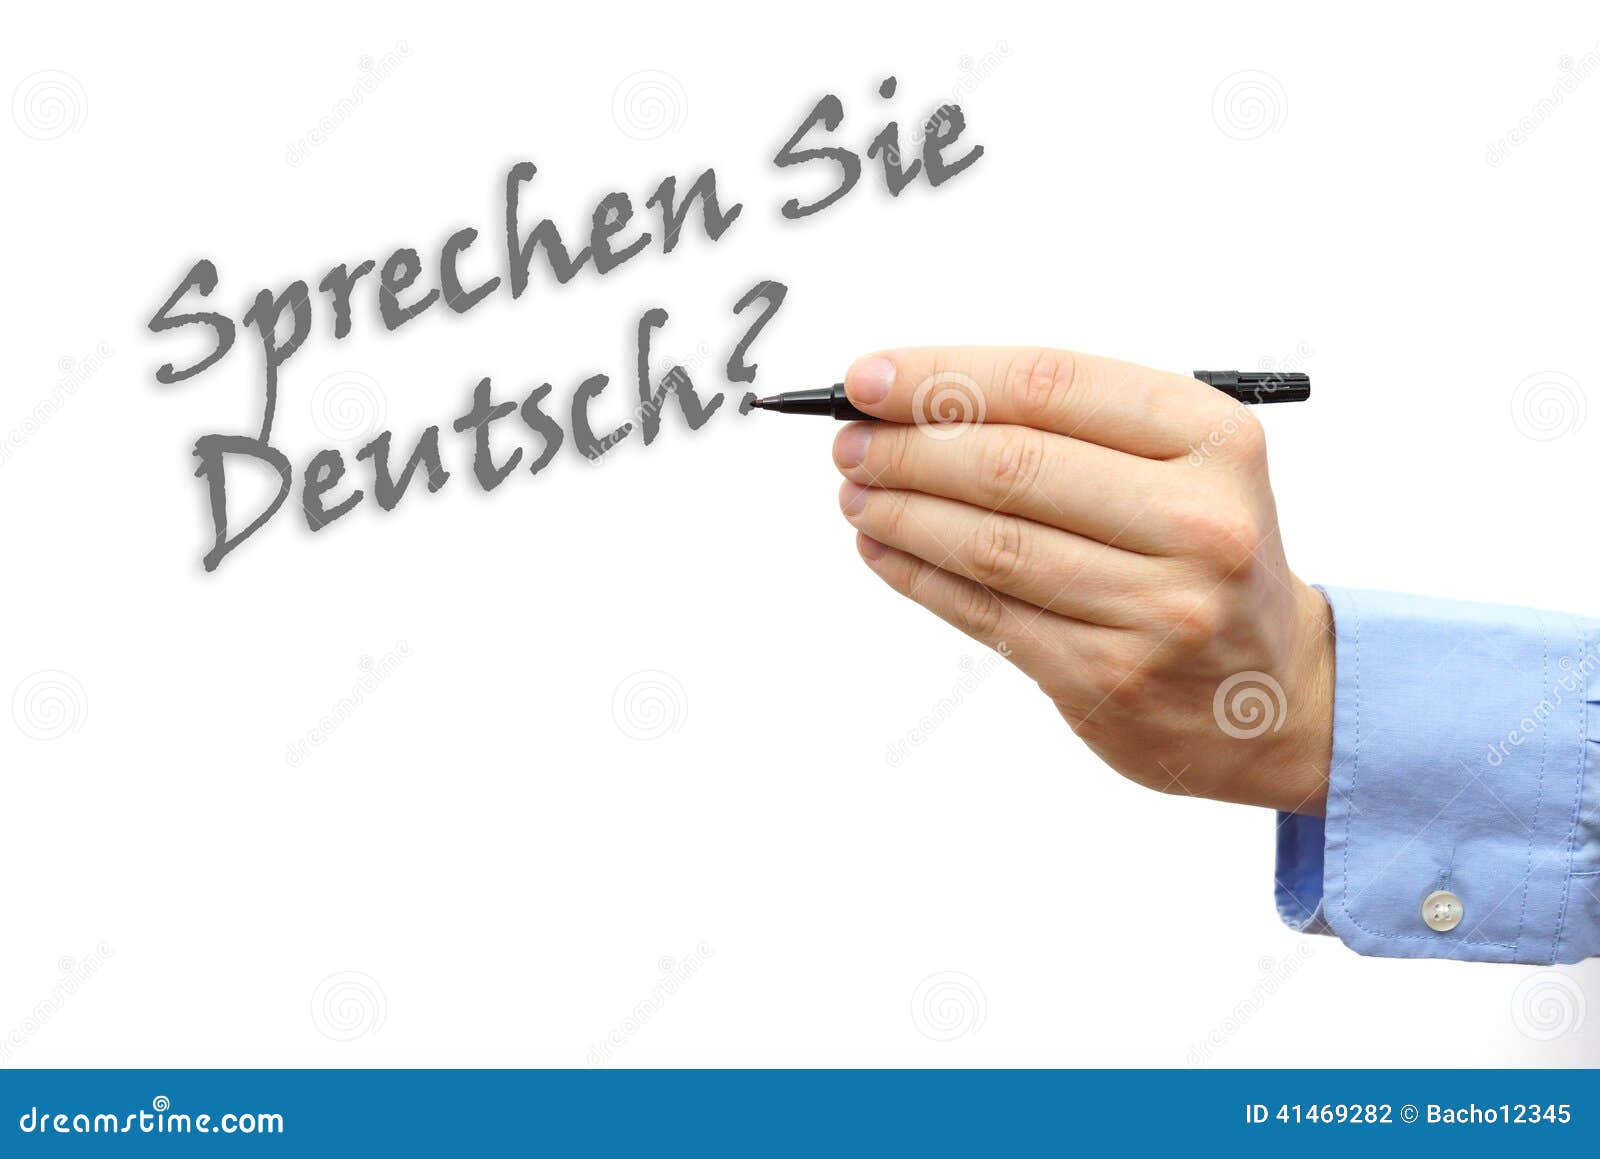 Do you speak german in german language